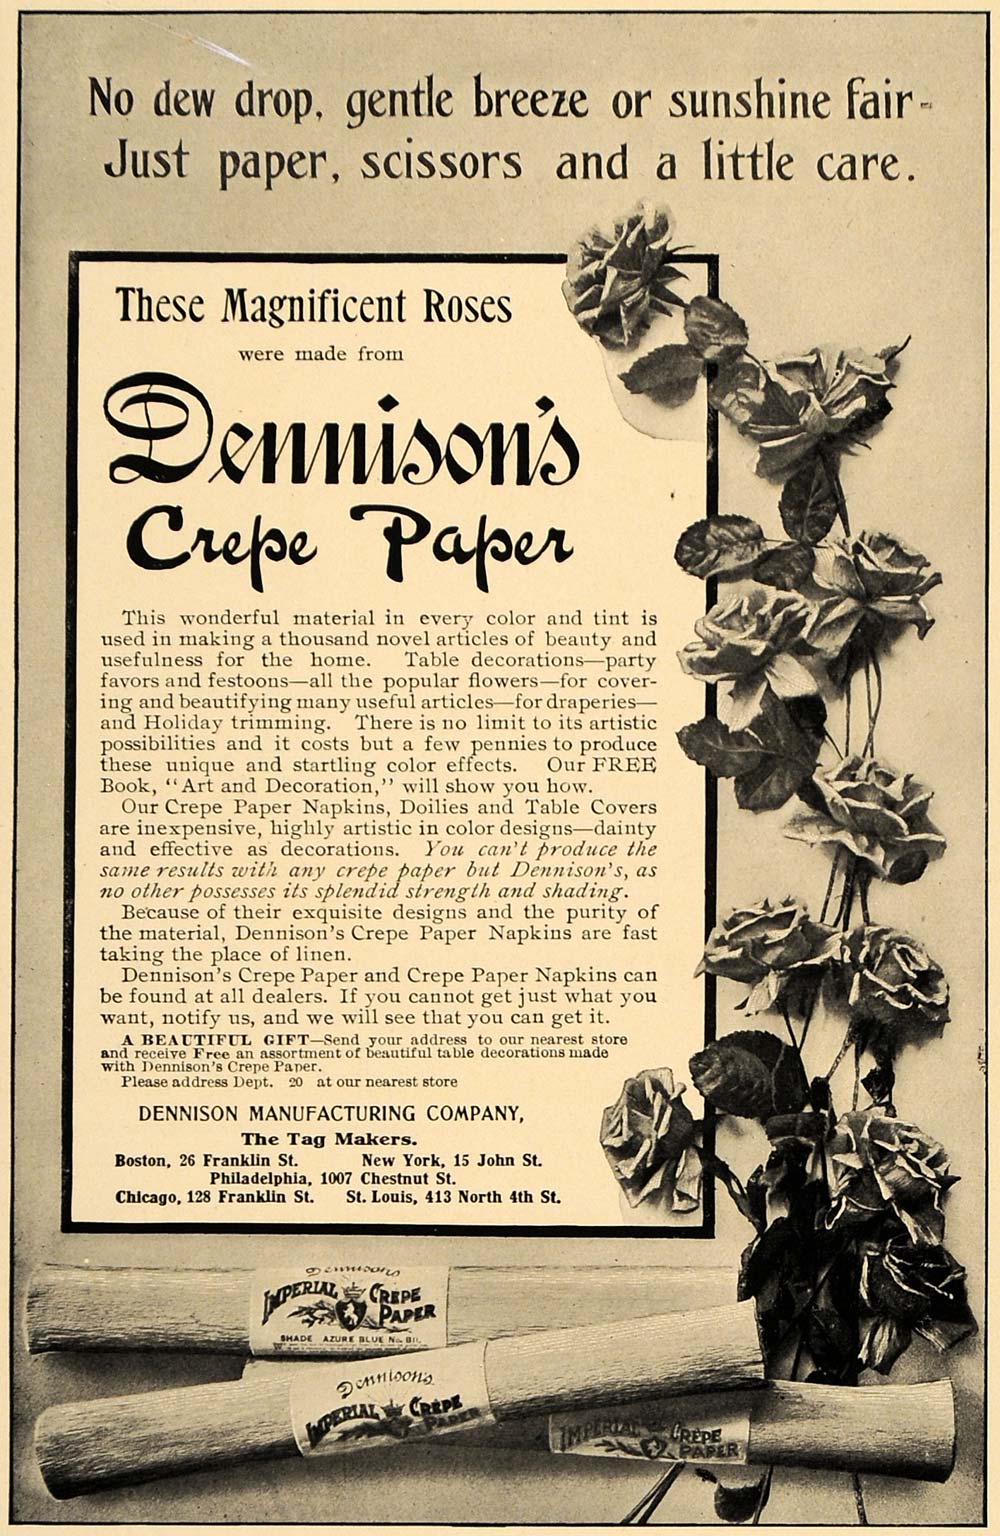 1906 Ad Rose Dennison Manufacturing Company Crepe Paper - ORIGINAL CL9